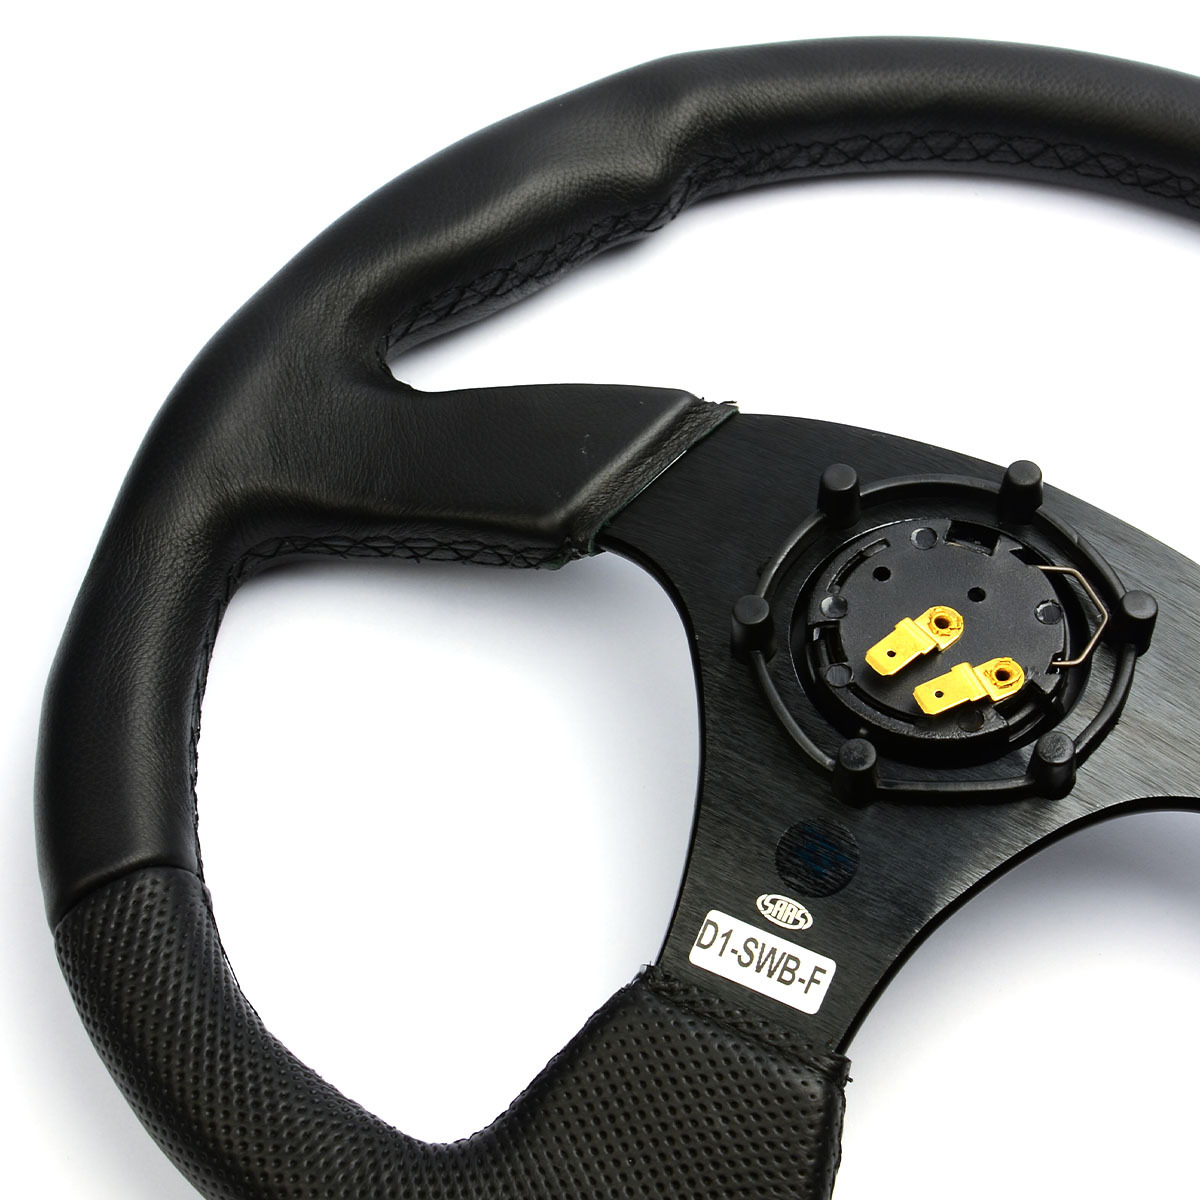 Steering Wheel Leather 14" ADR Black Flat Bottom